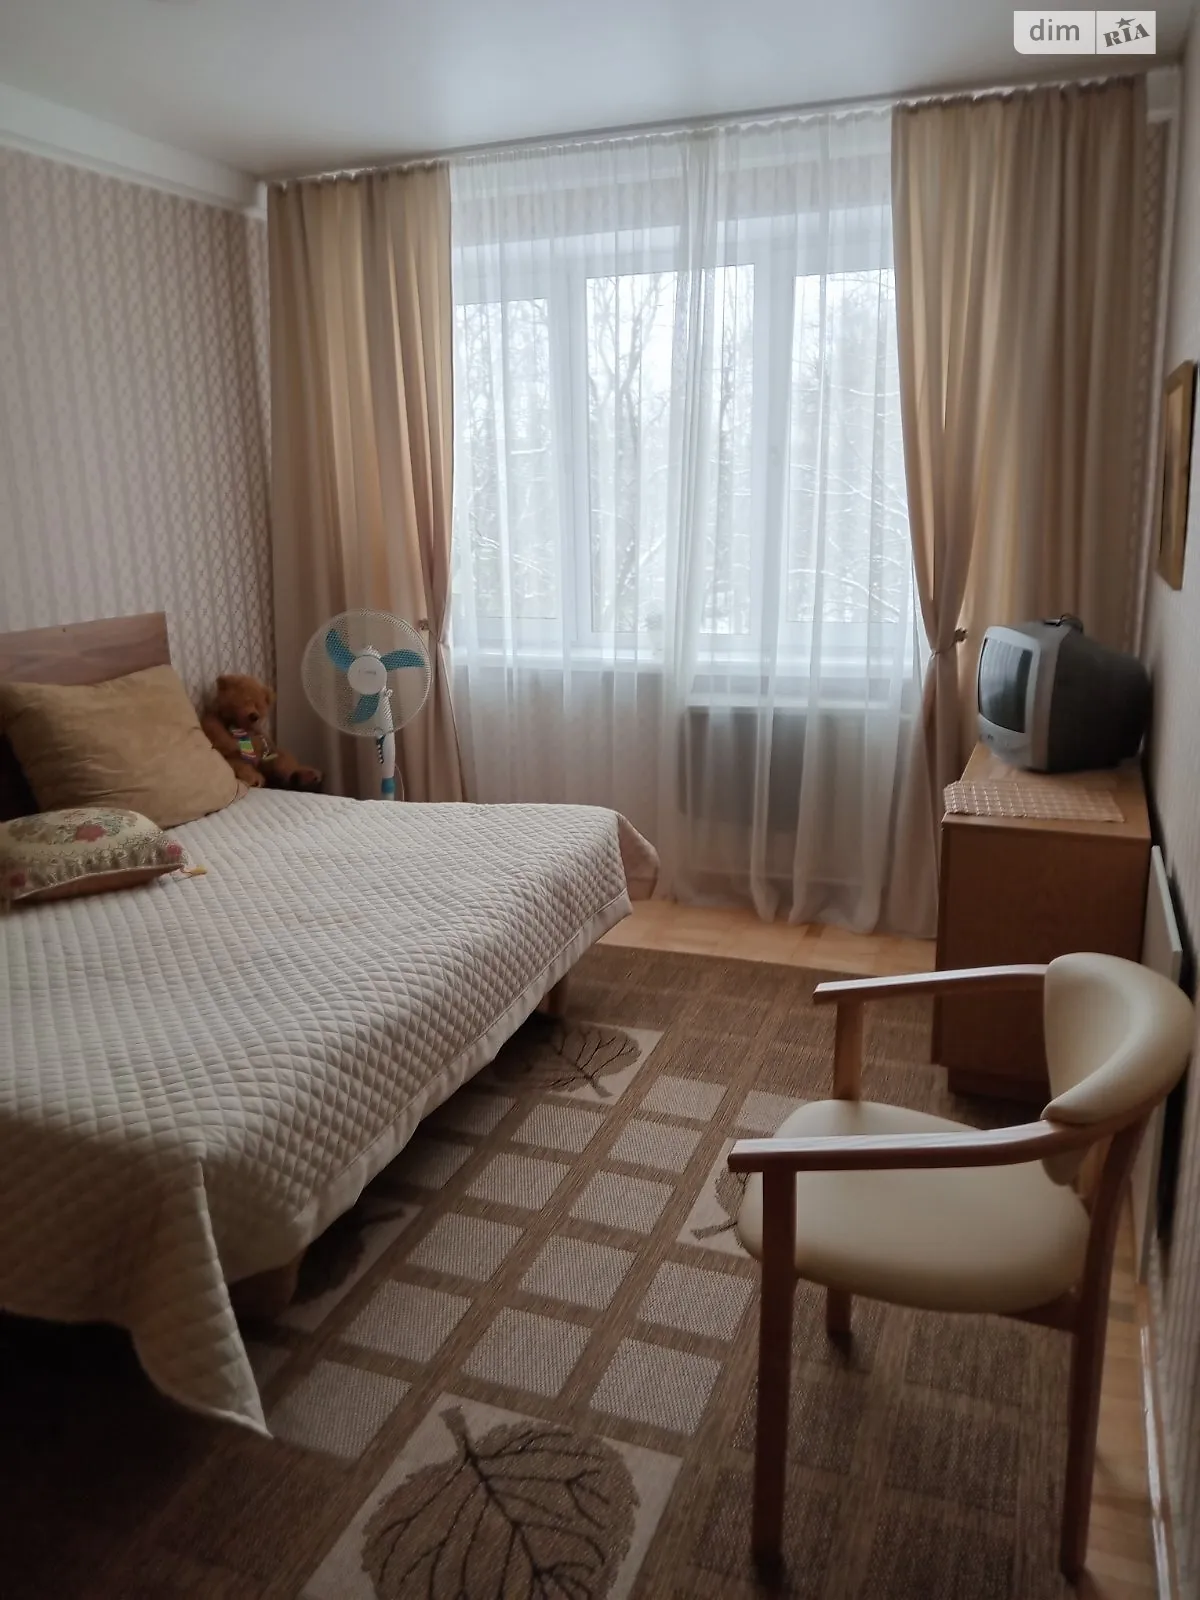 Сдается в аренду комната 45 кв. м в Киеве, цена: 4000 грн - фото 1